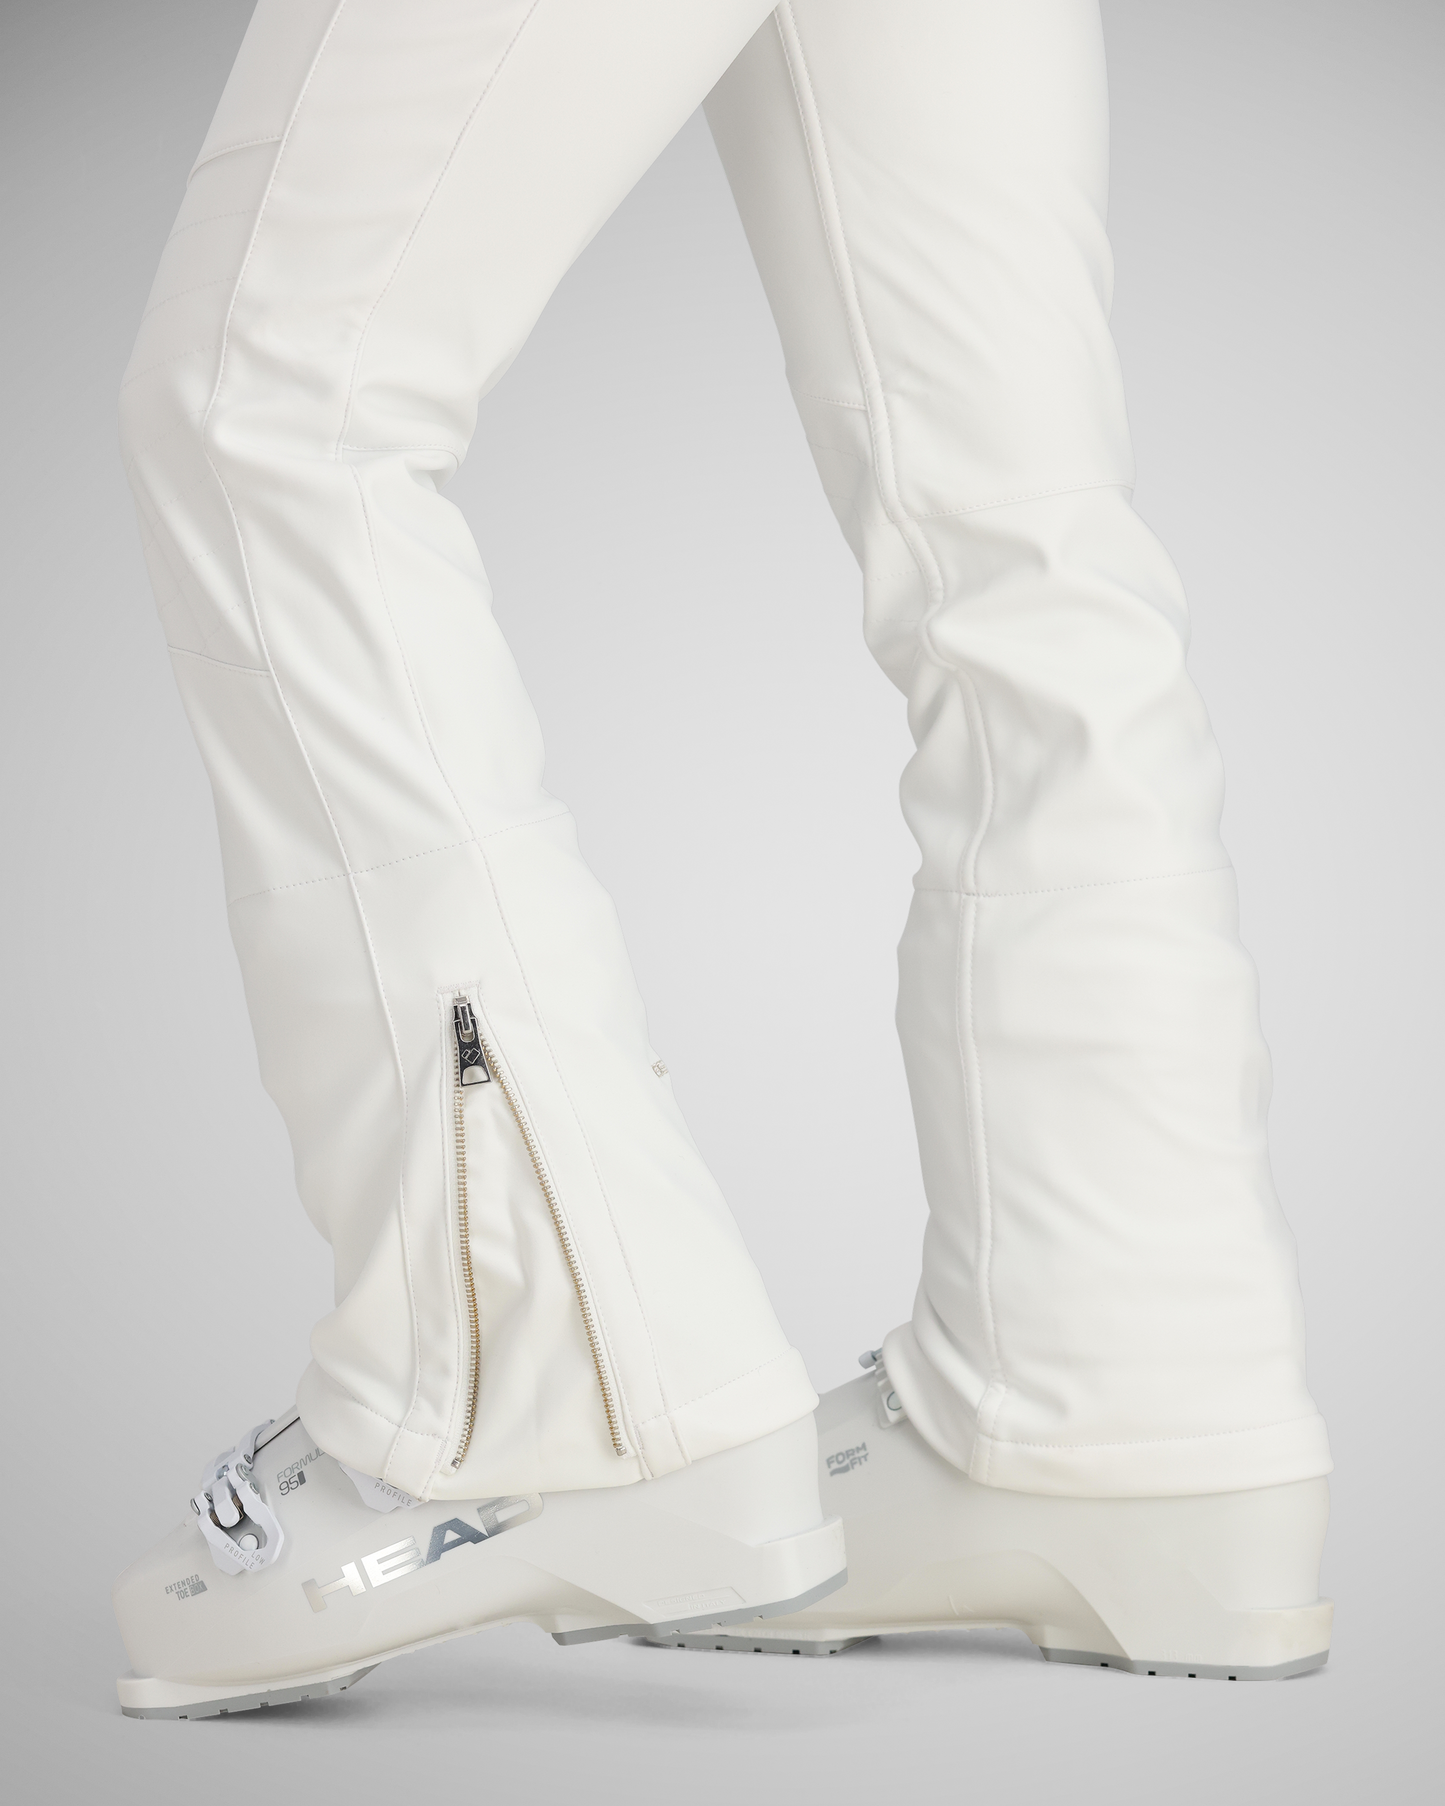 Zipper hem gussets | Best-in-class zippers provide immediate adjustment access when you need it.